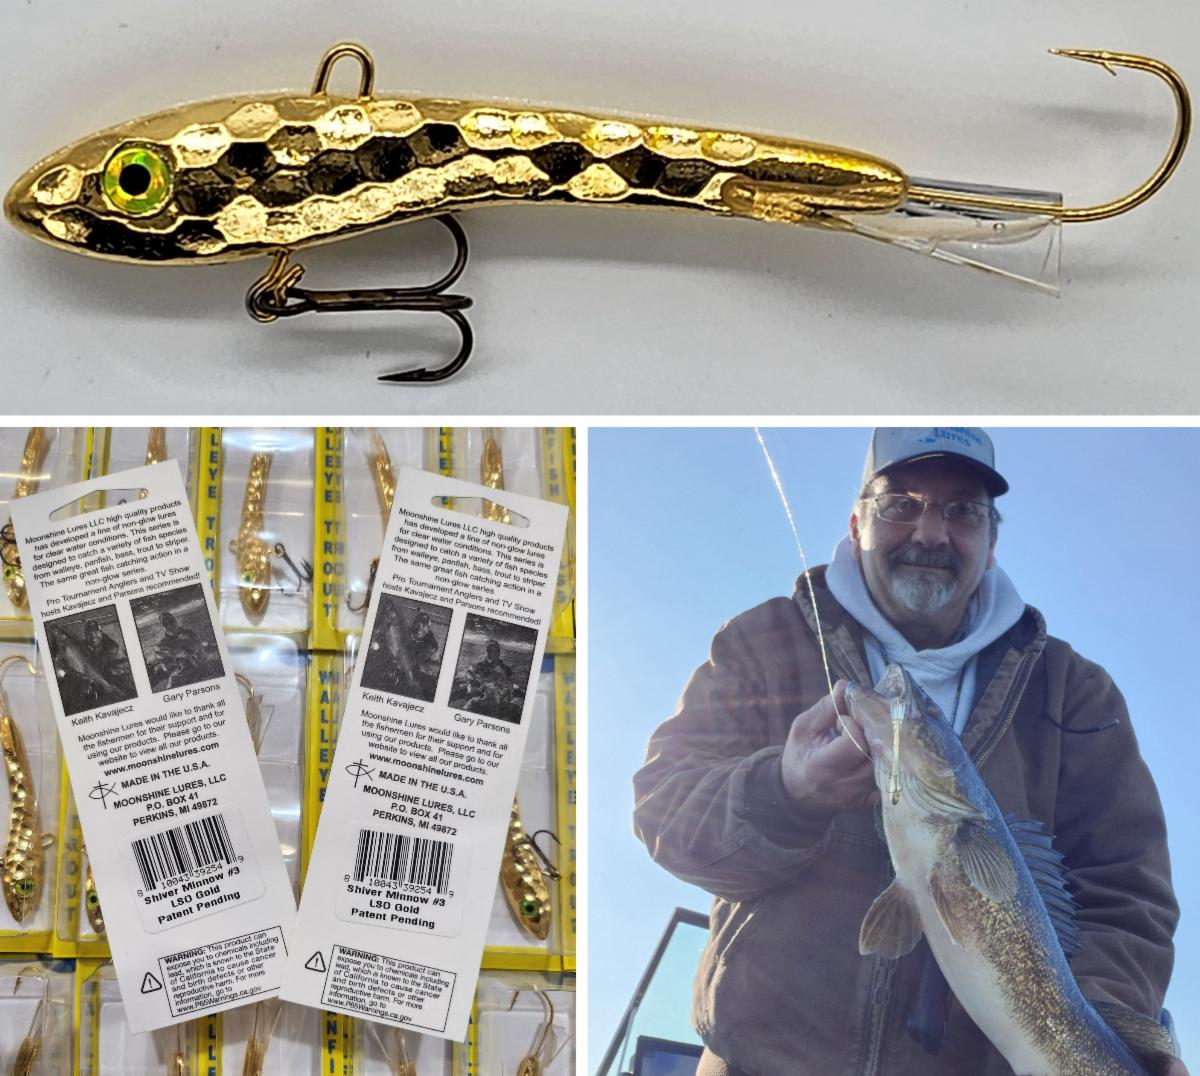 New walleye fishing stuff from ICAST (part 1) – Target Walleye